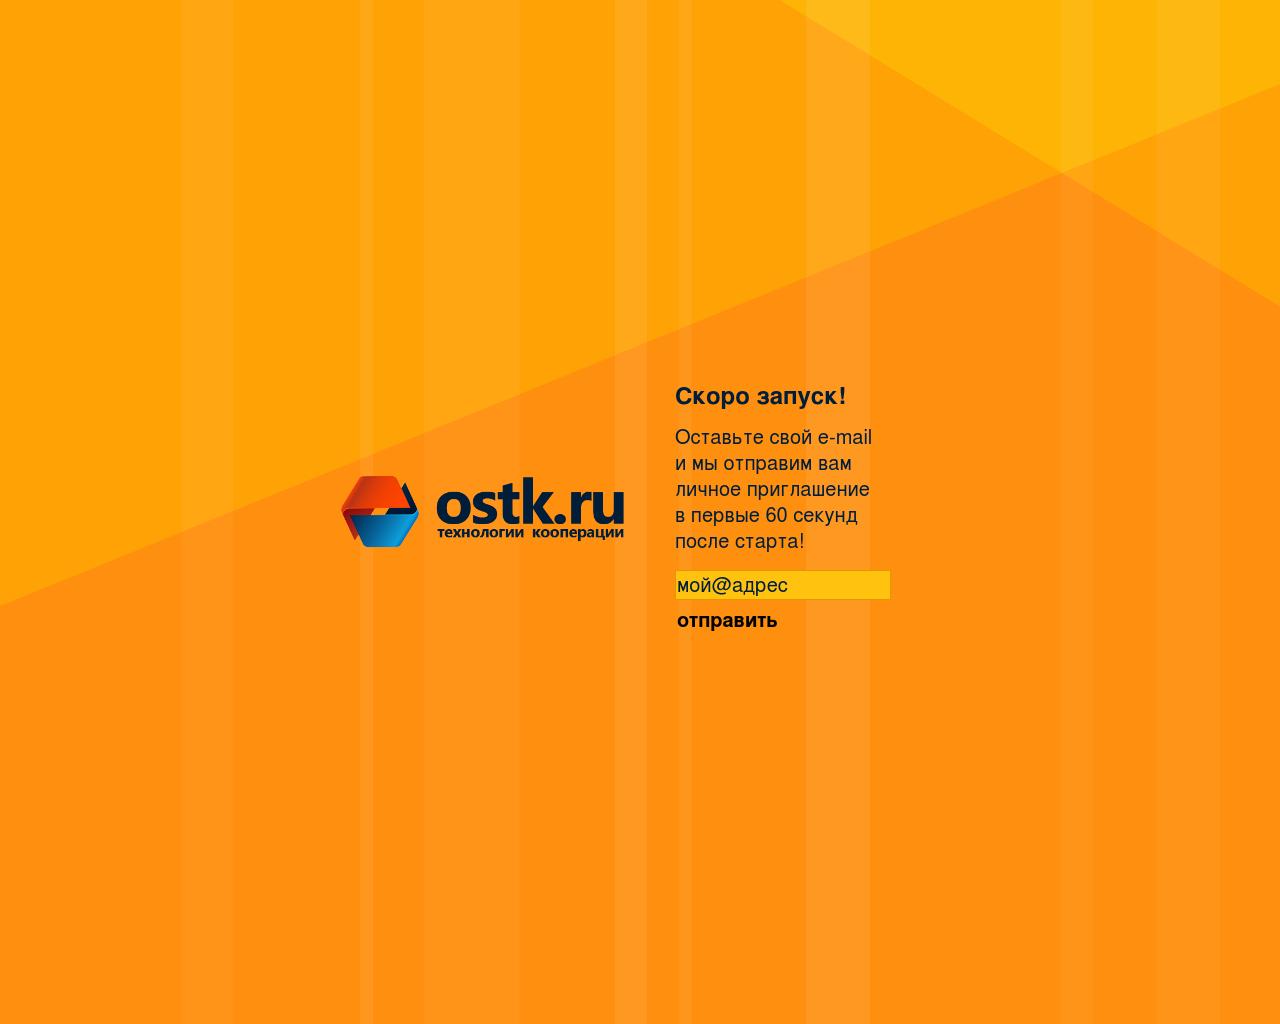 Изображение сайта ostk.ru в разрешении 1280x1024